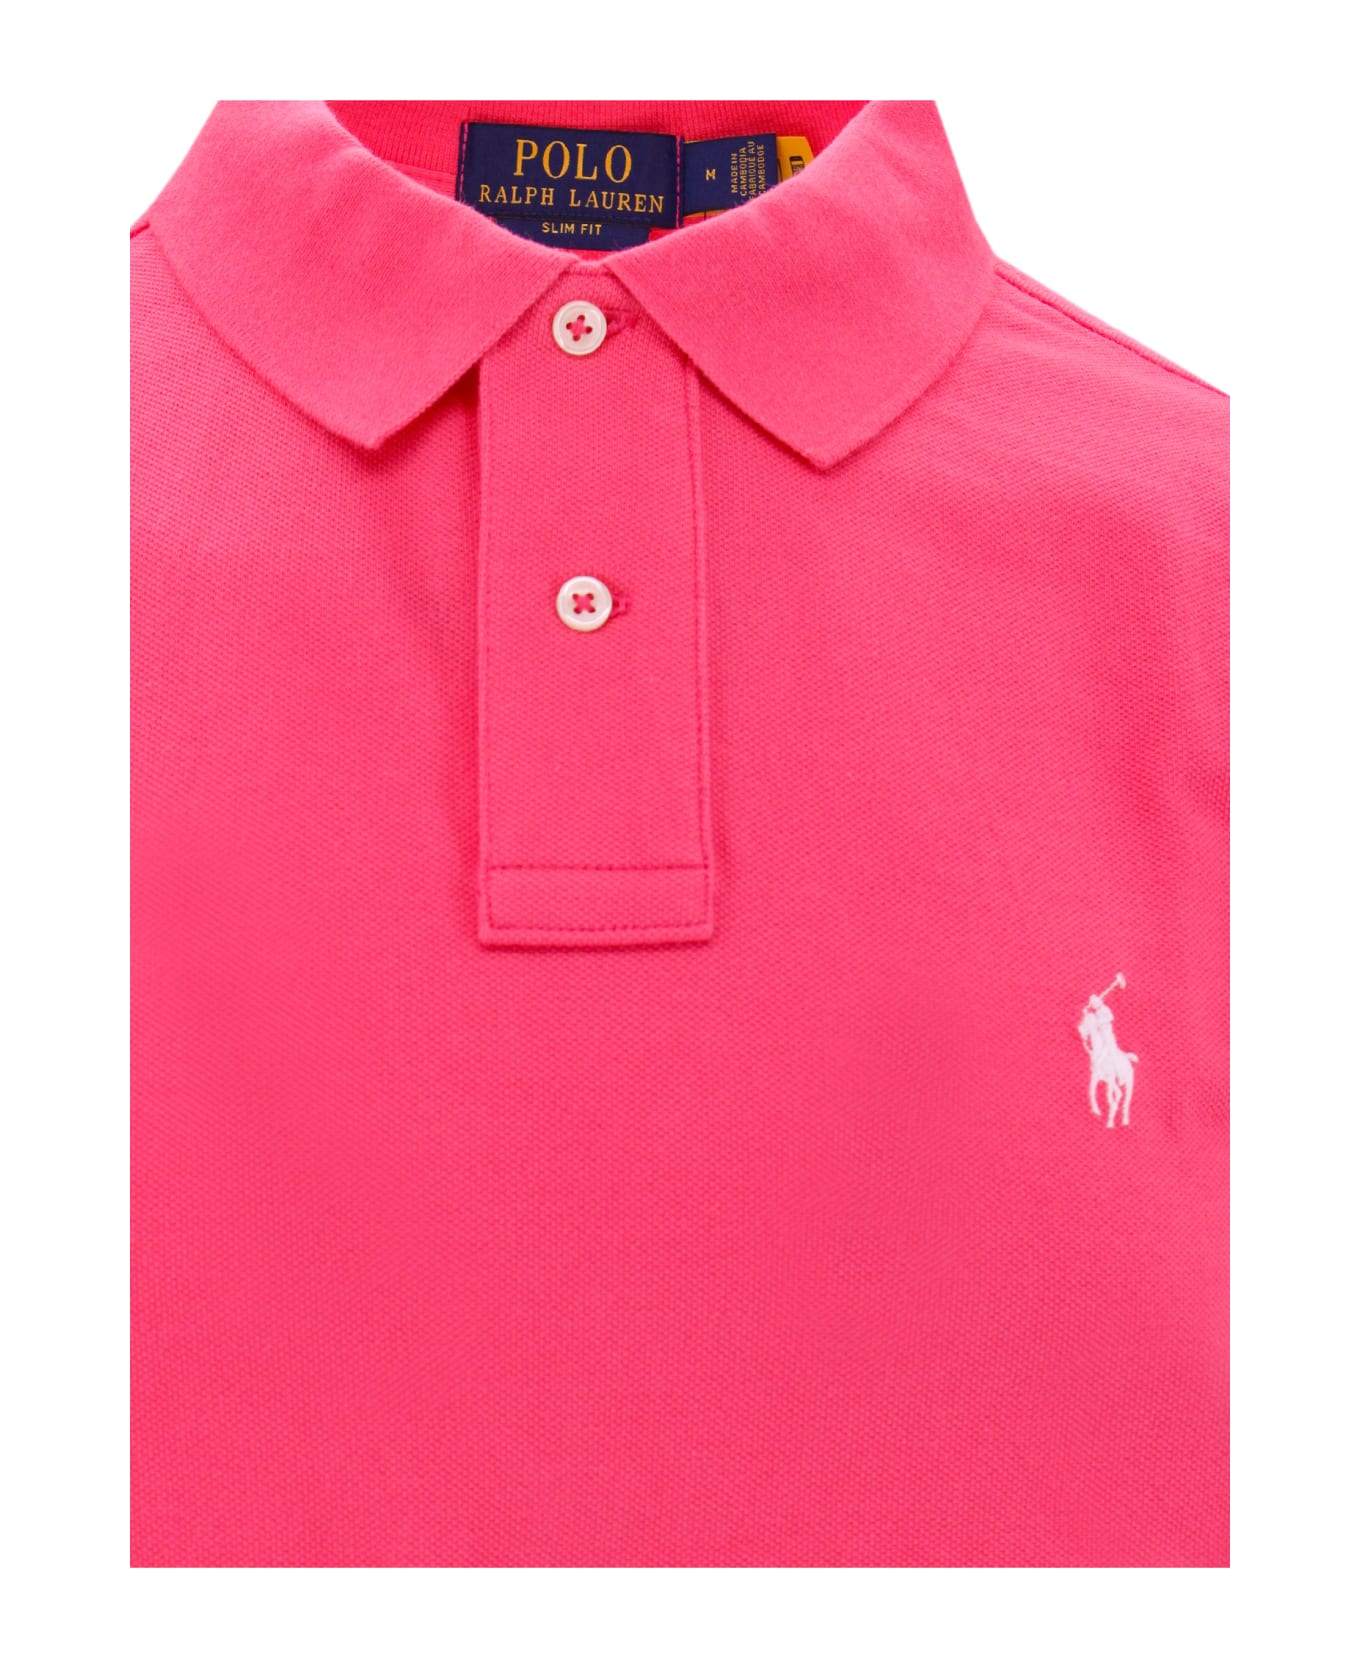 Polo Ralph Lauren Polo Shirt - Hot pink ポロシャツ